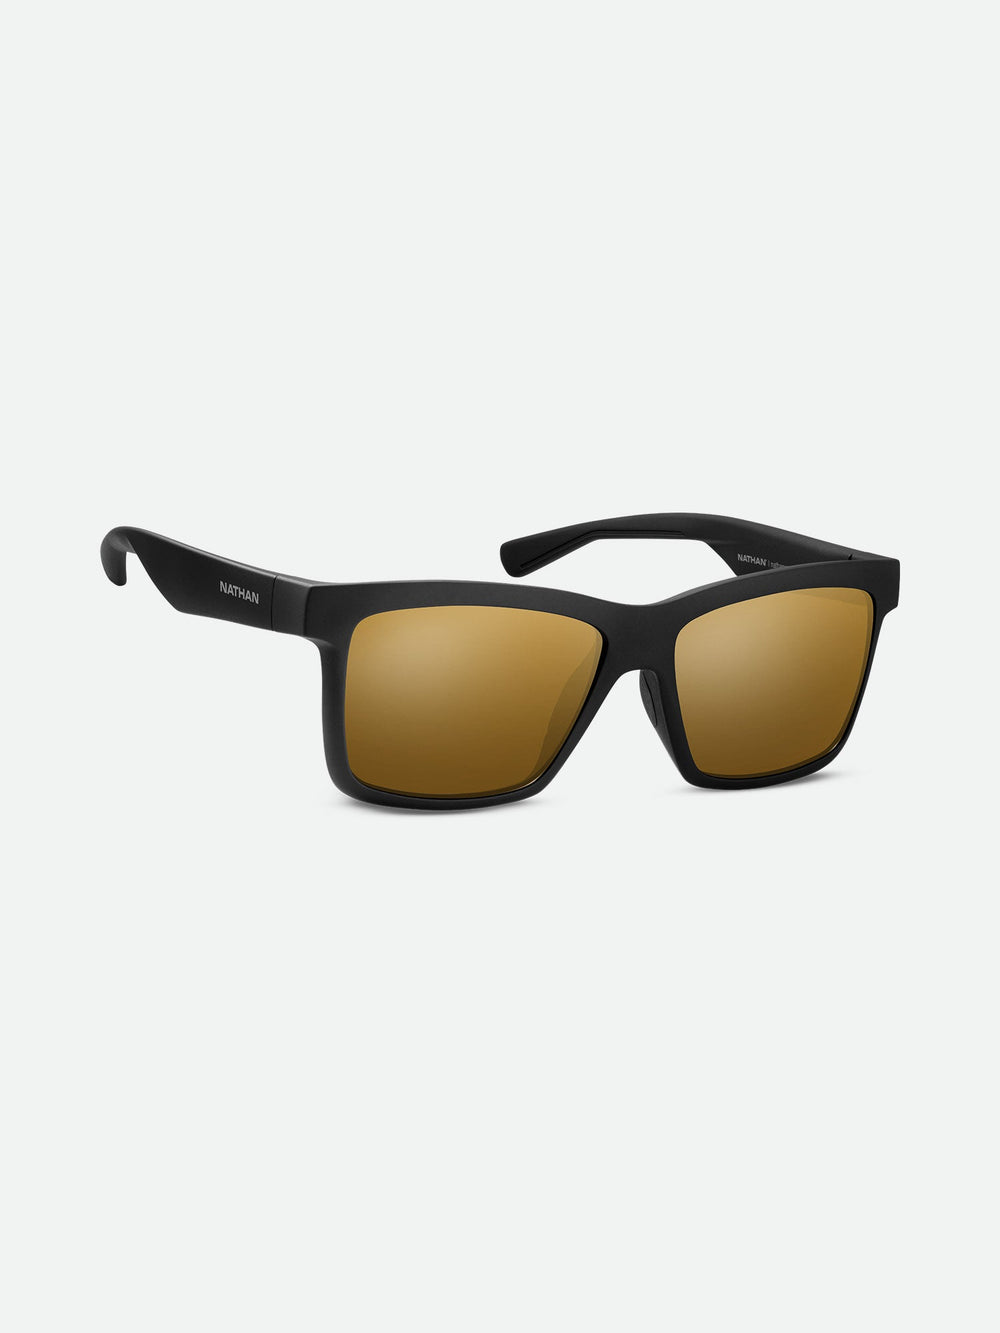 Nathan Adventure Polarized Sunglasses - Black